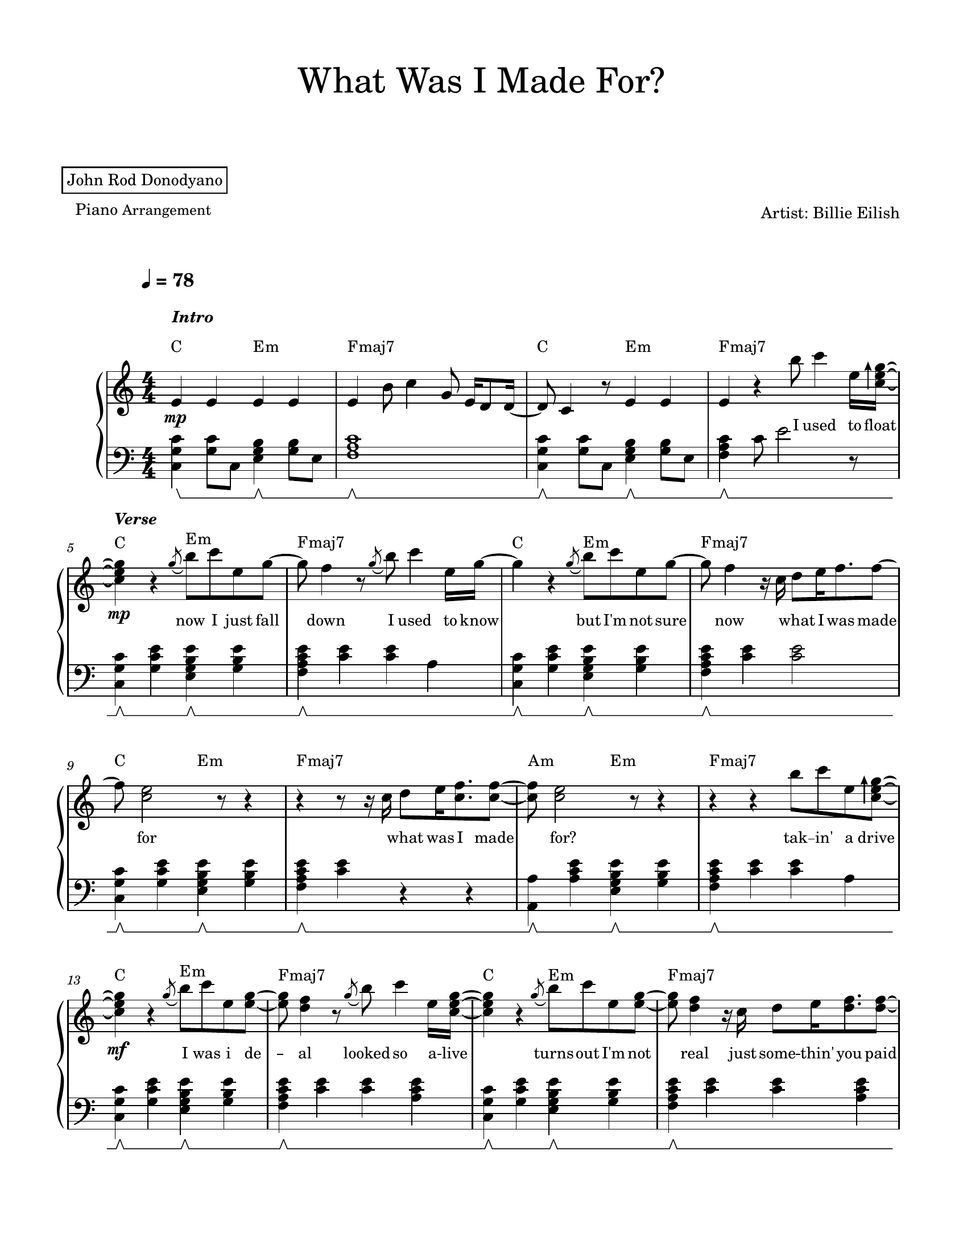 Billie Eilish - What Was I Made For? (PIANO SHEET) by John Rod Dondoyano